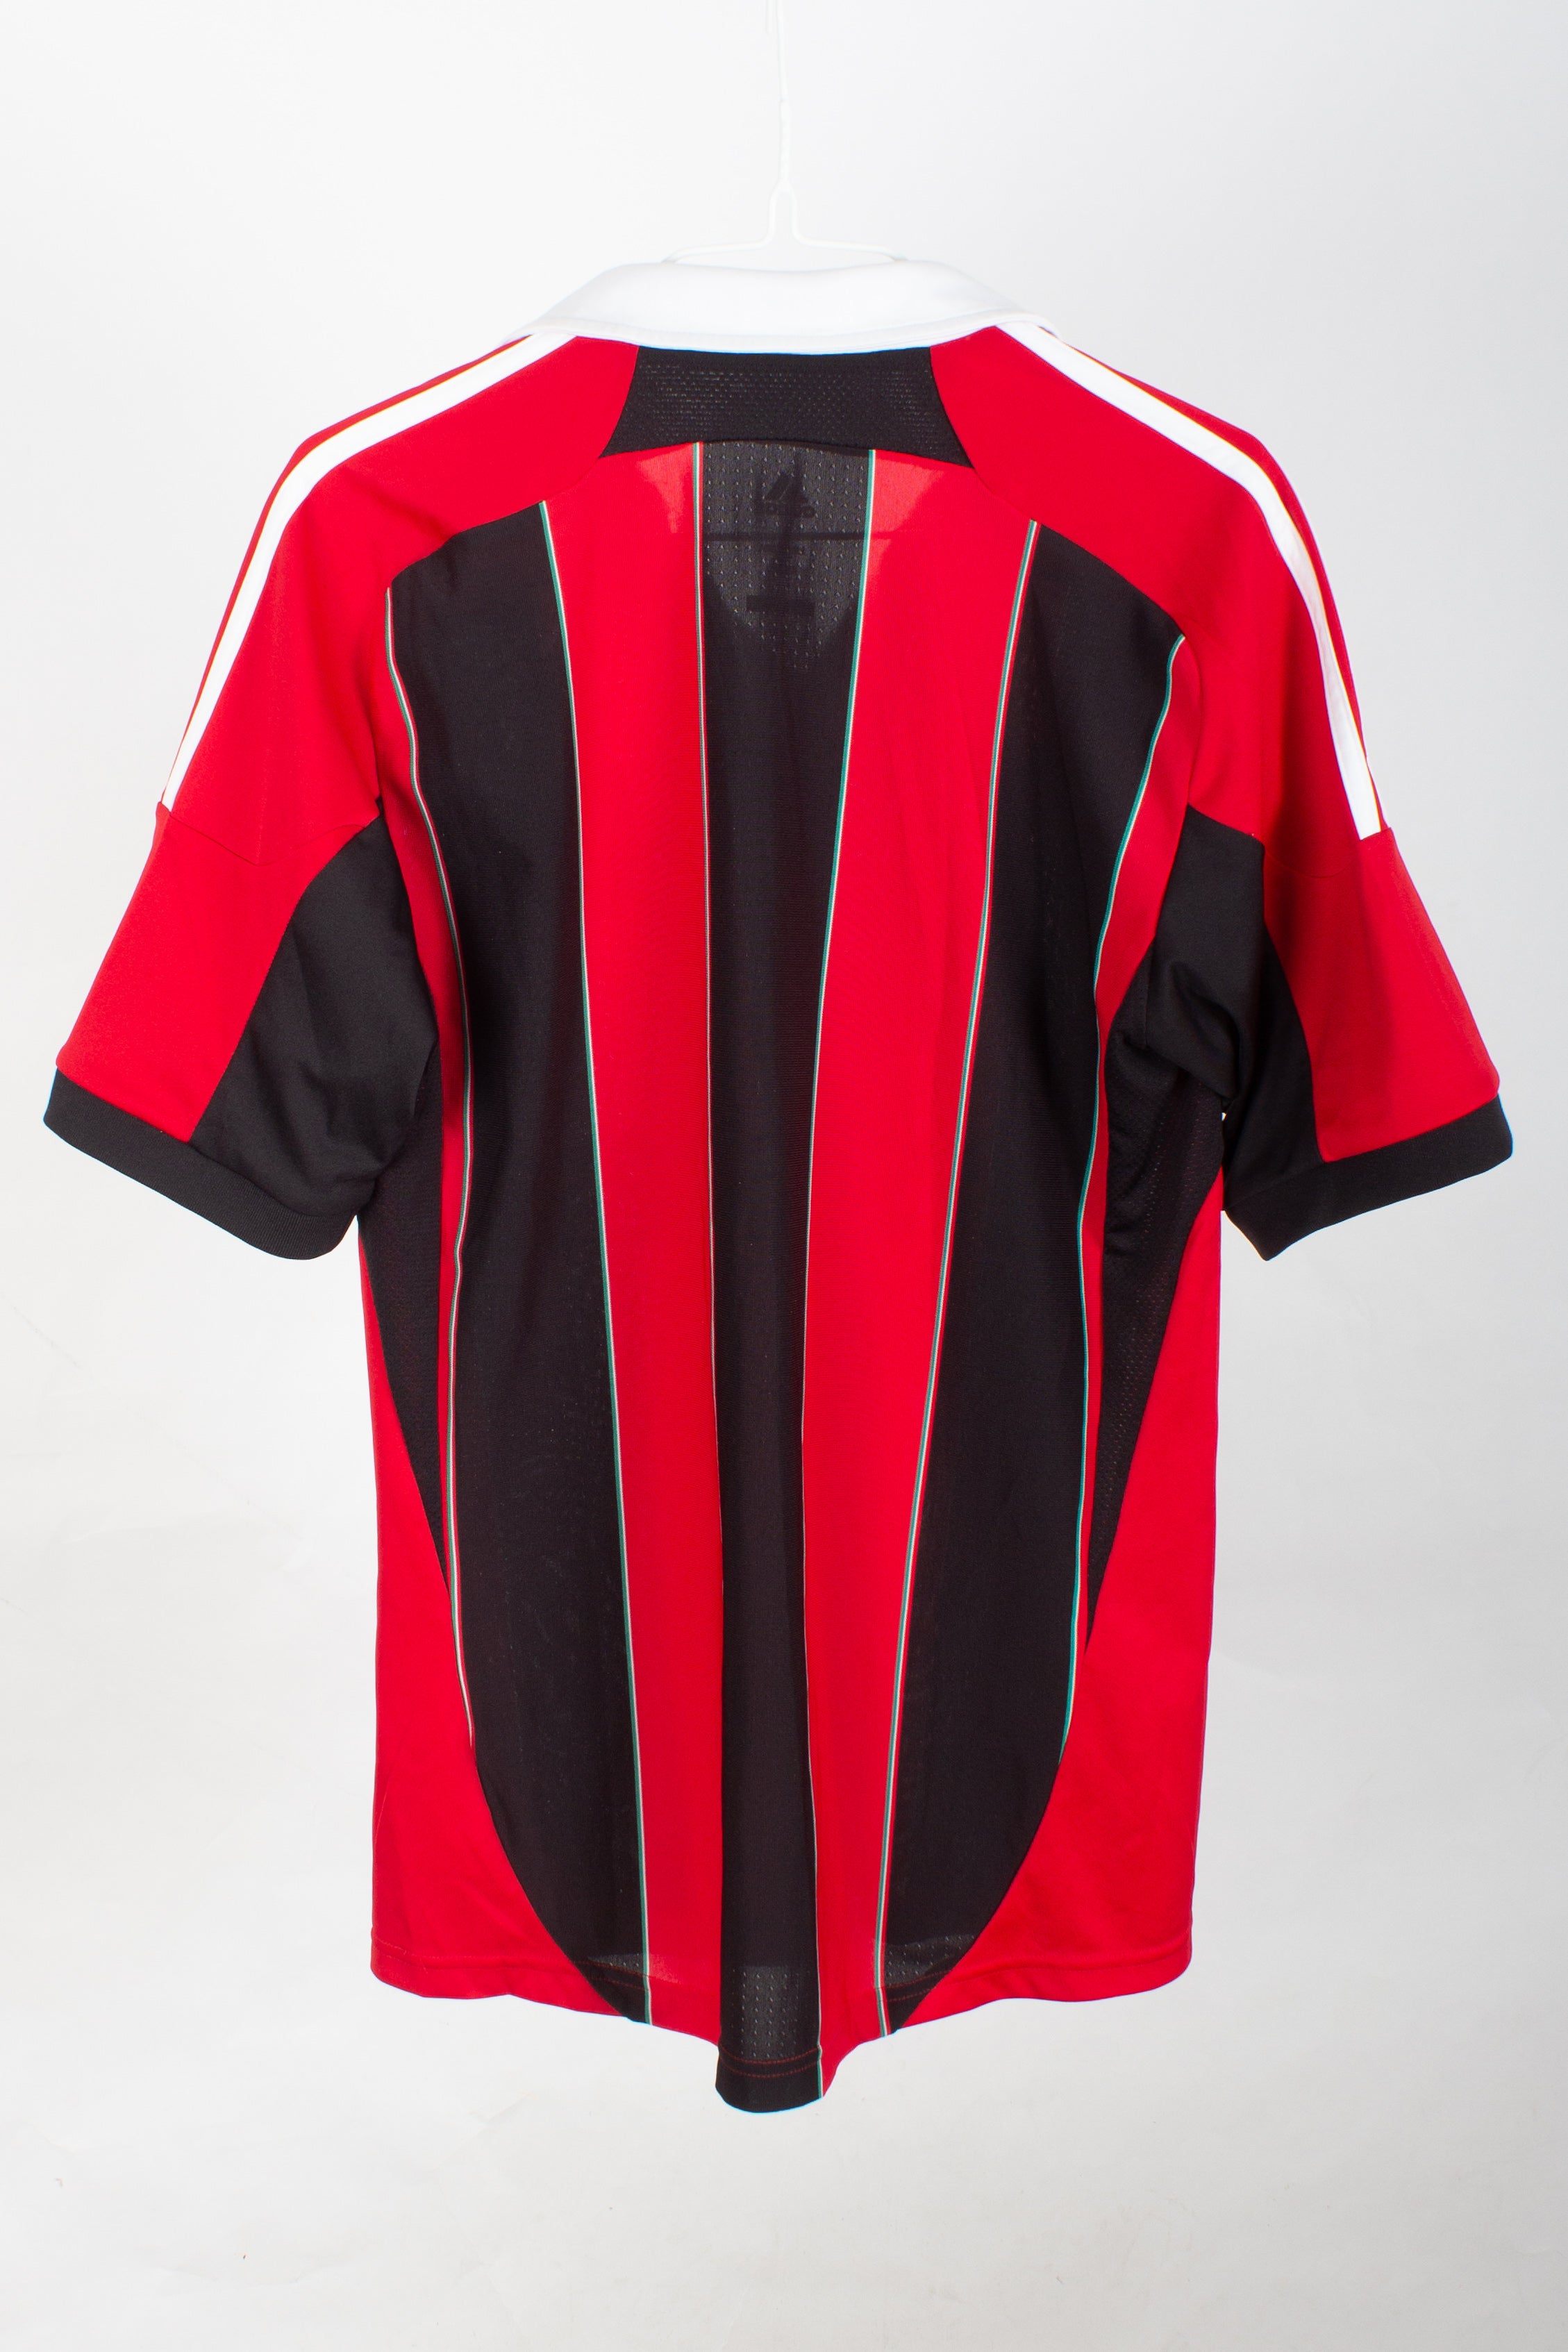 AC Milan 2012/13 Home Shirt (S)